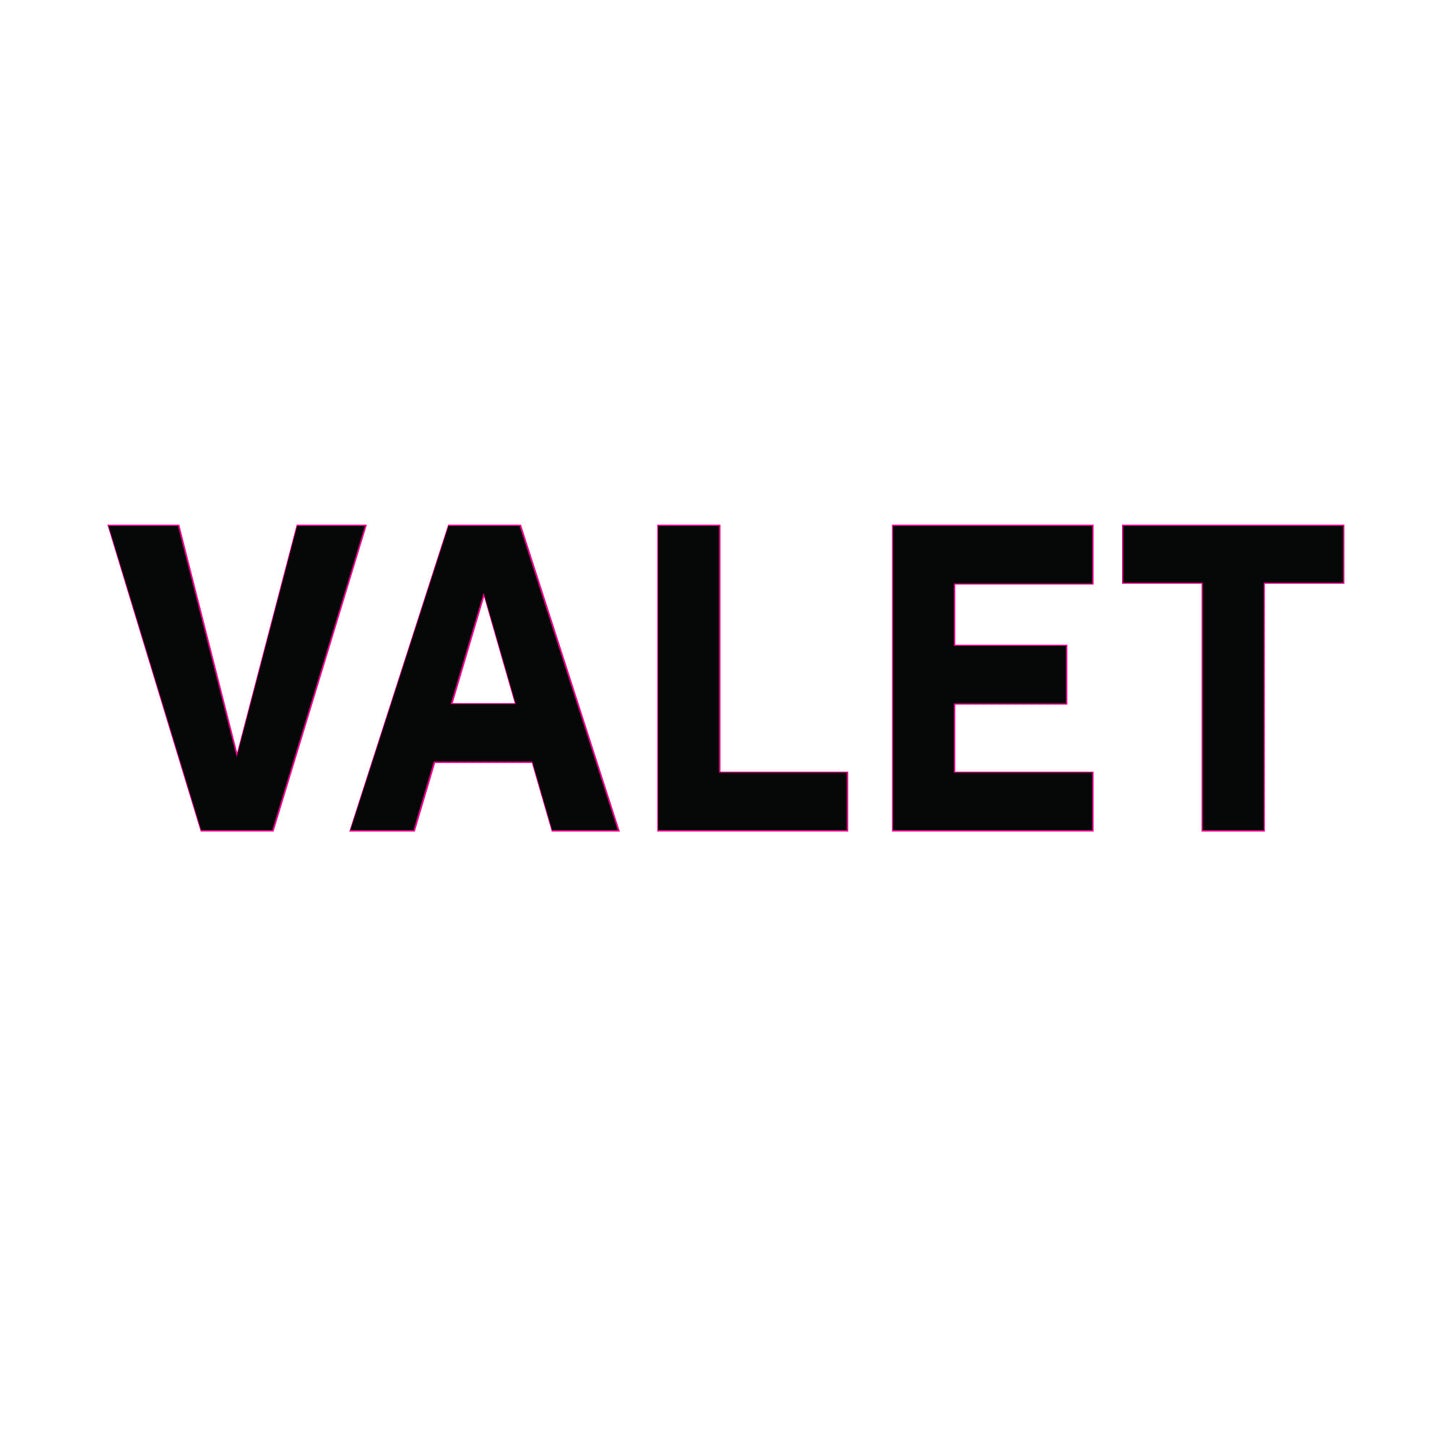 Valet - vinyl graphic